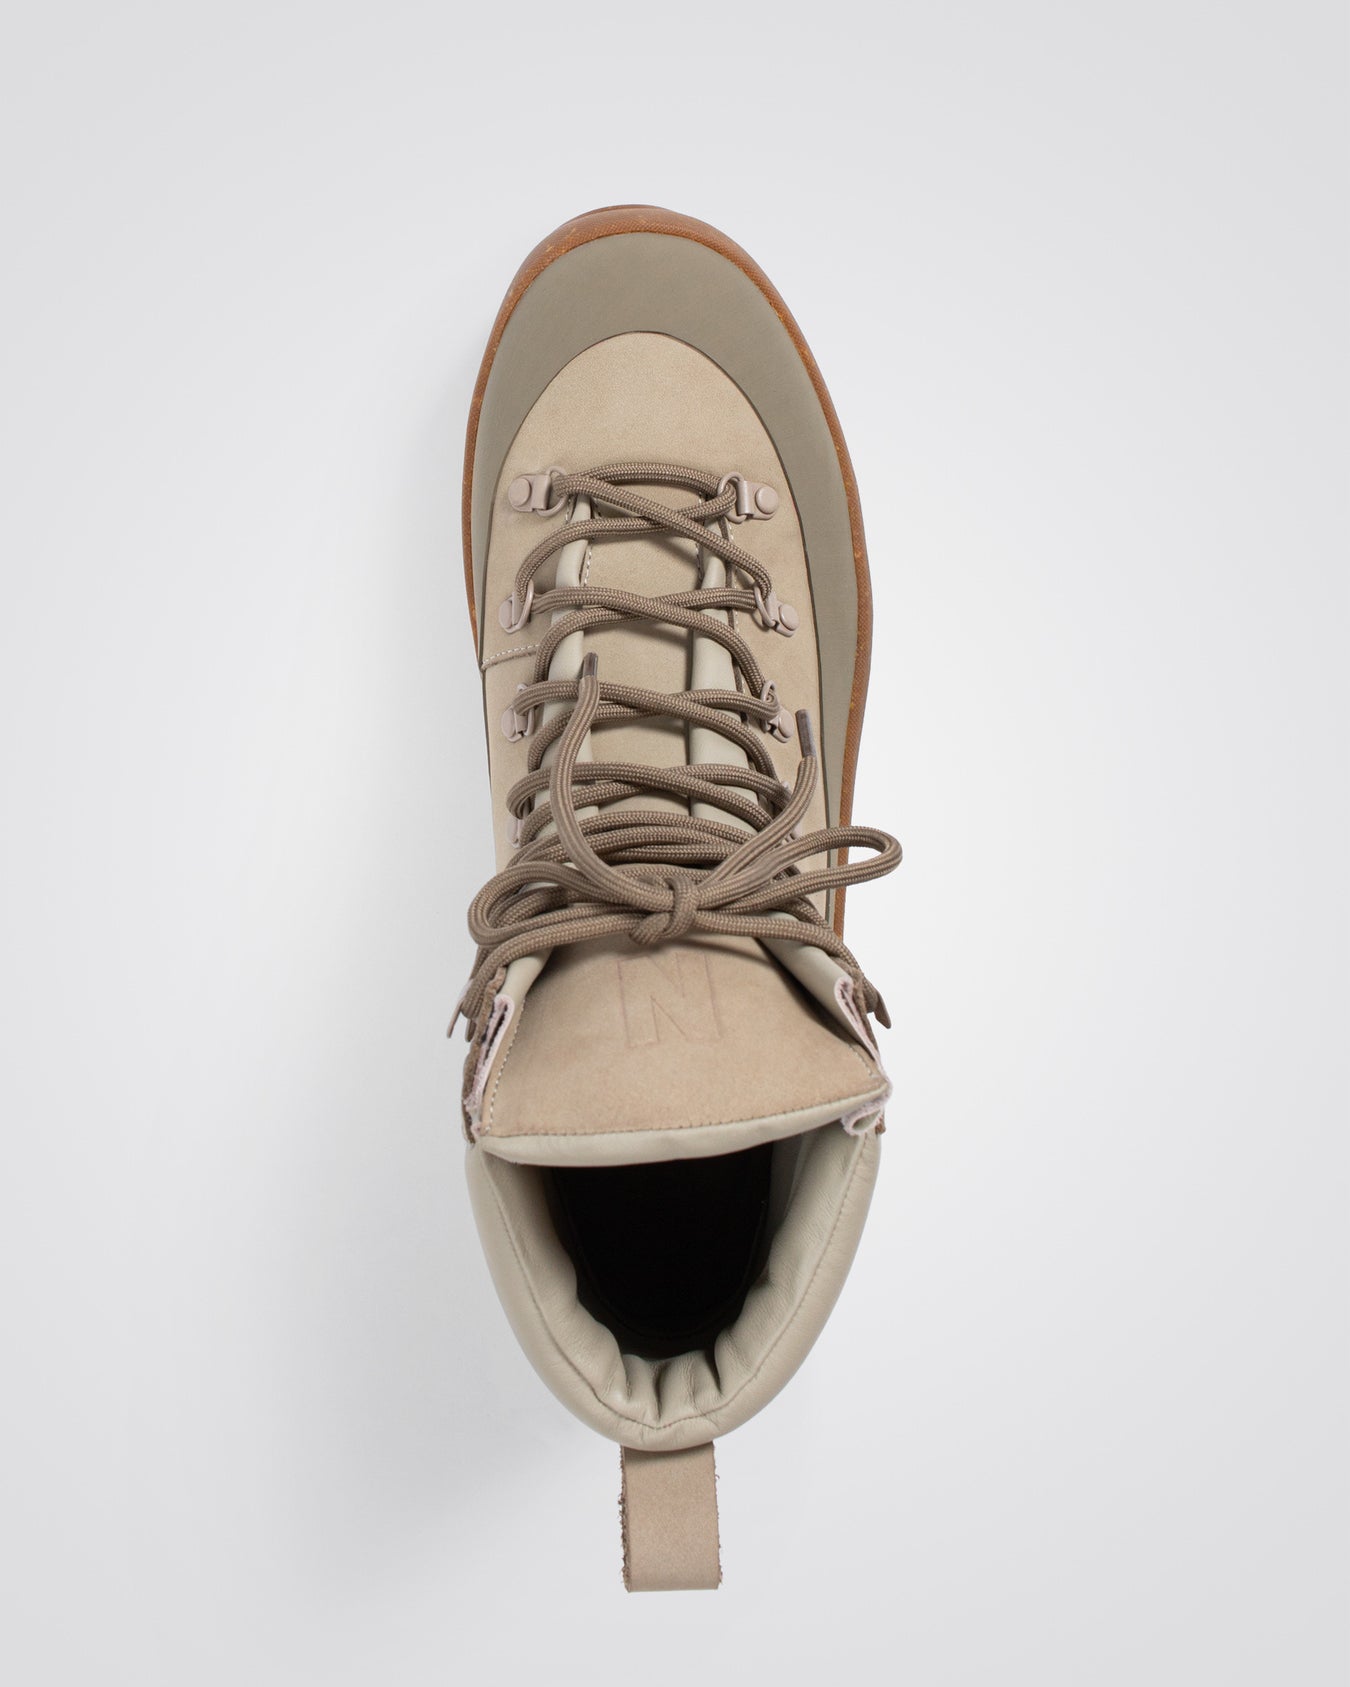 Leather Hiking Boot - Khaki